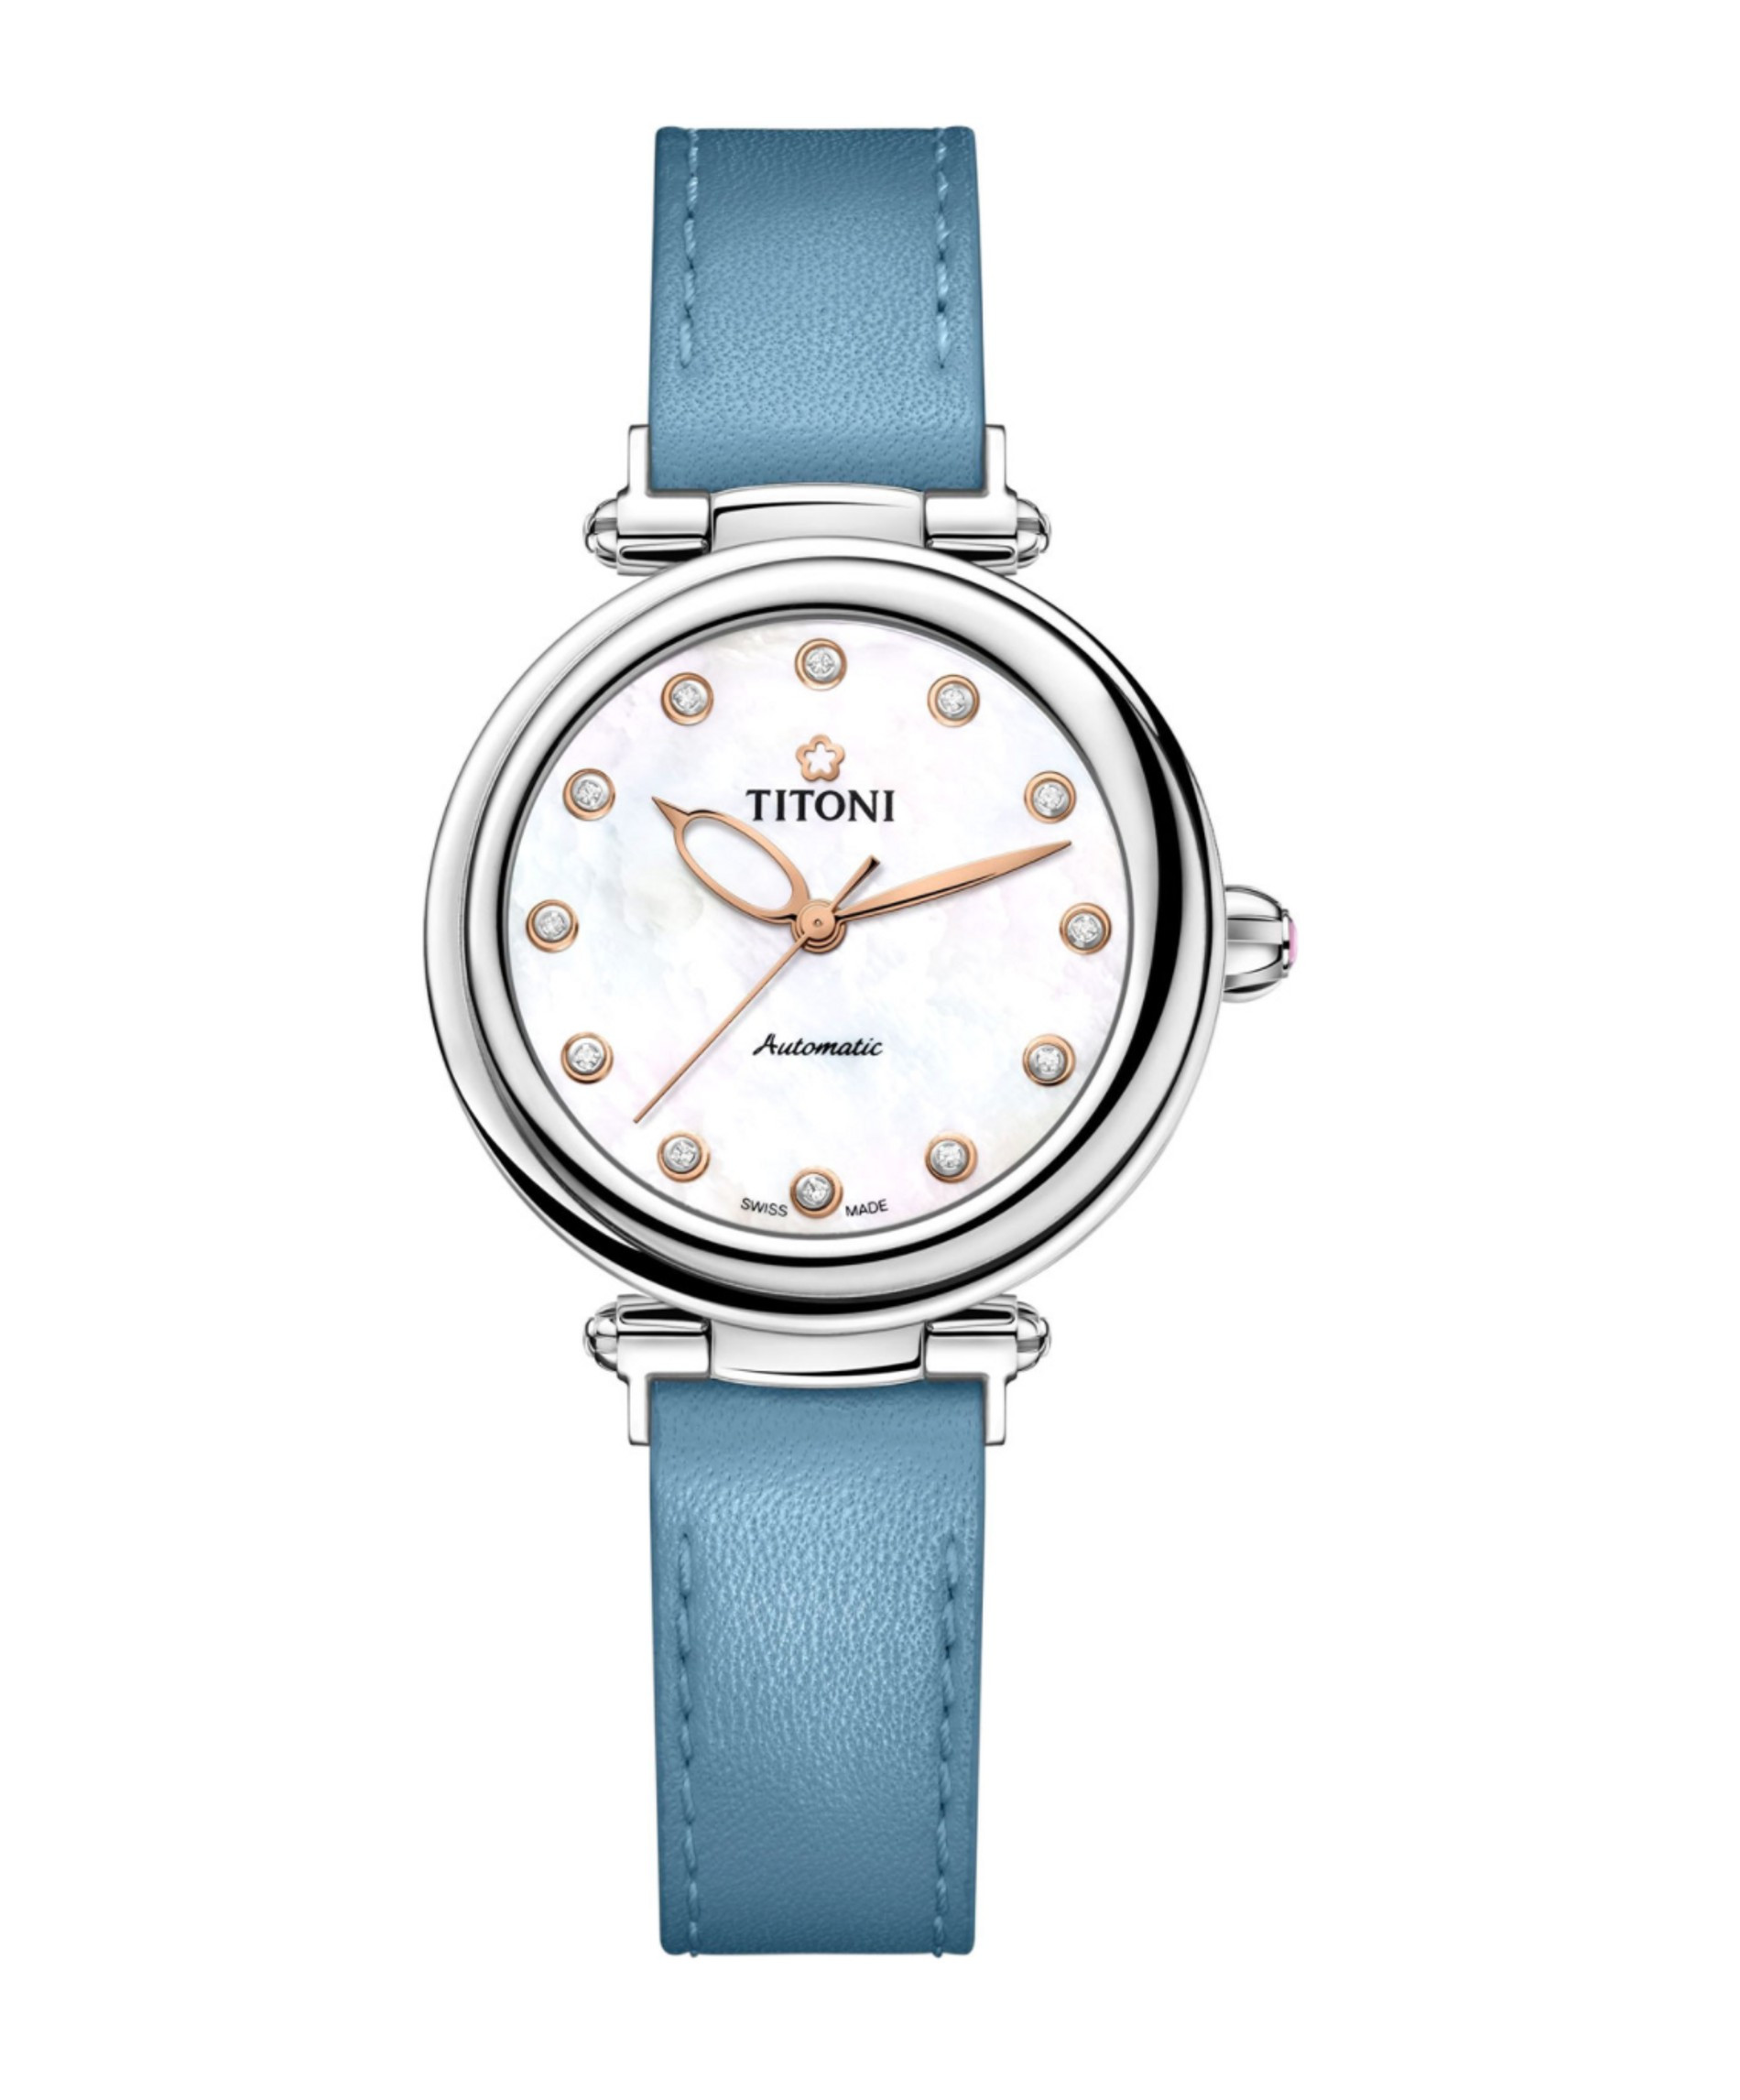 Часы Miss Lovely бренда Titoni. Источник: архив пресс-службы